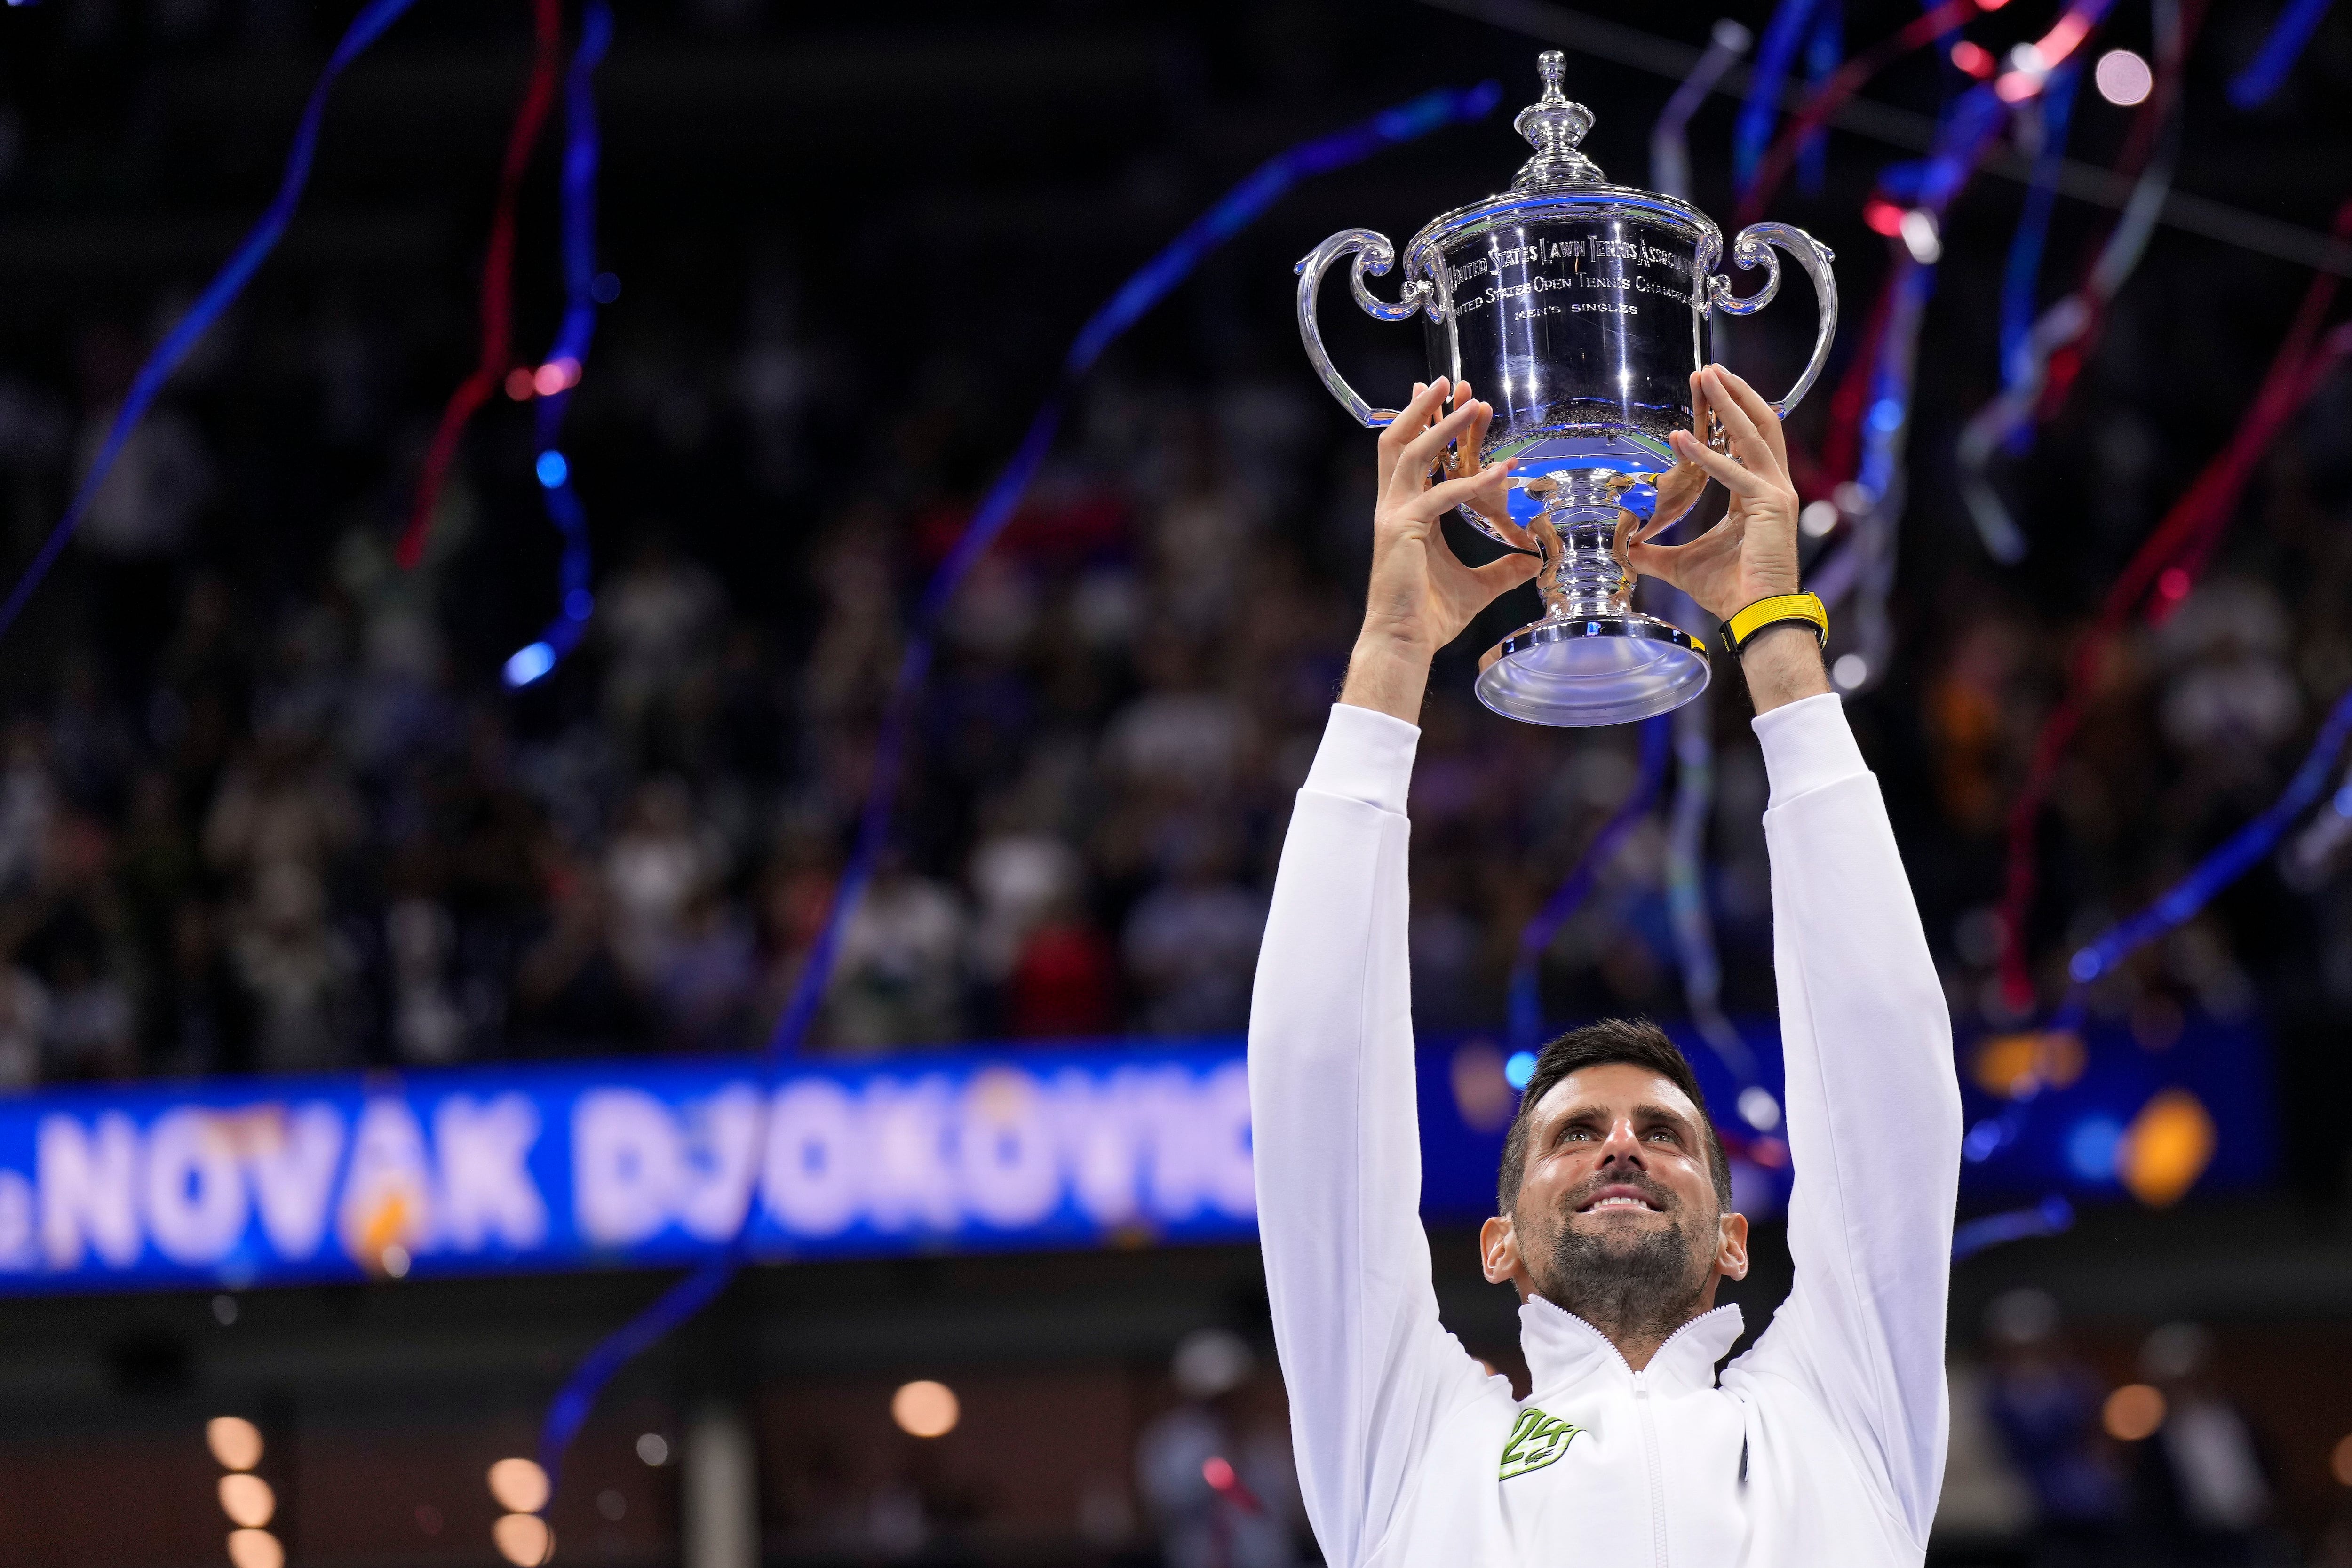 US Open men's final live tracker: Novak Djokovic faces Daniil